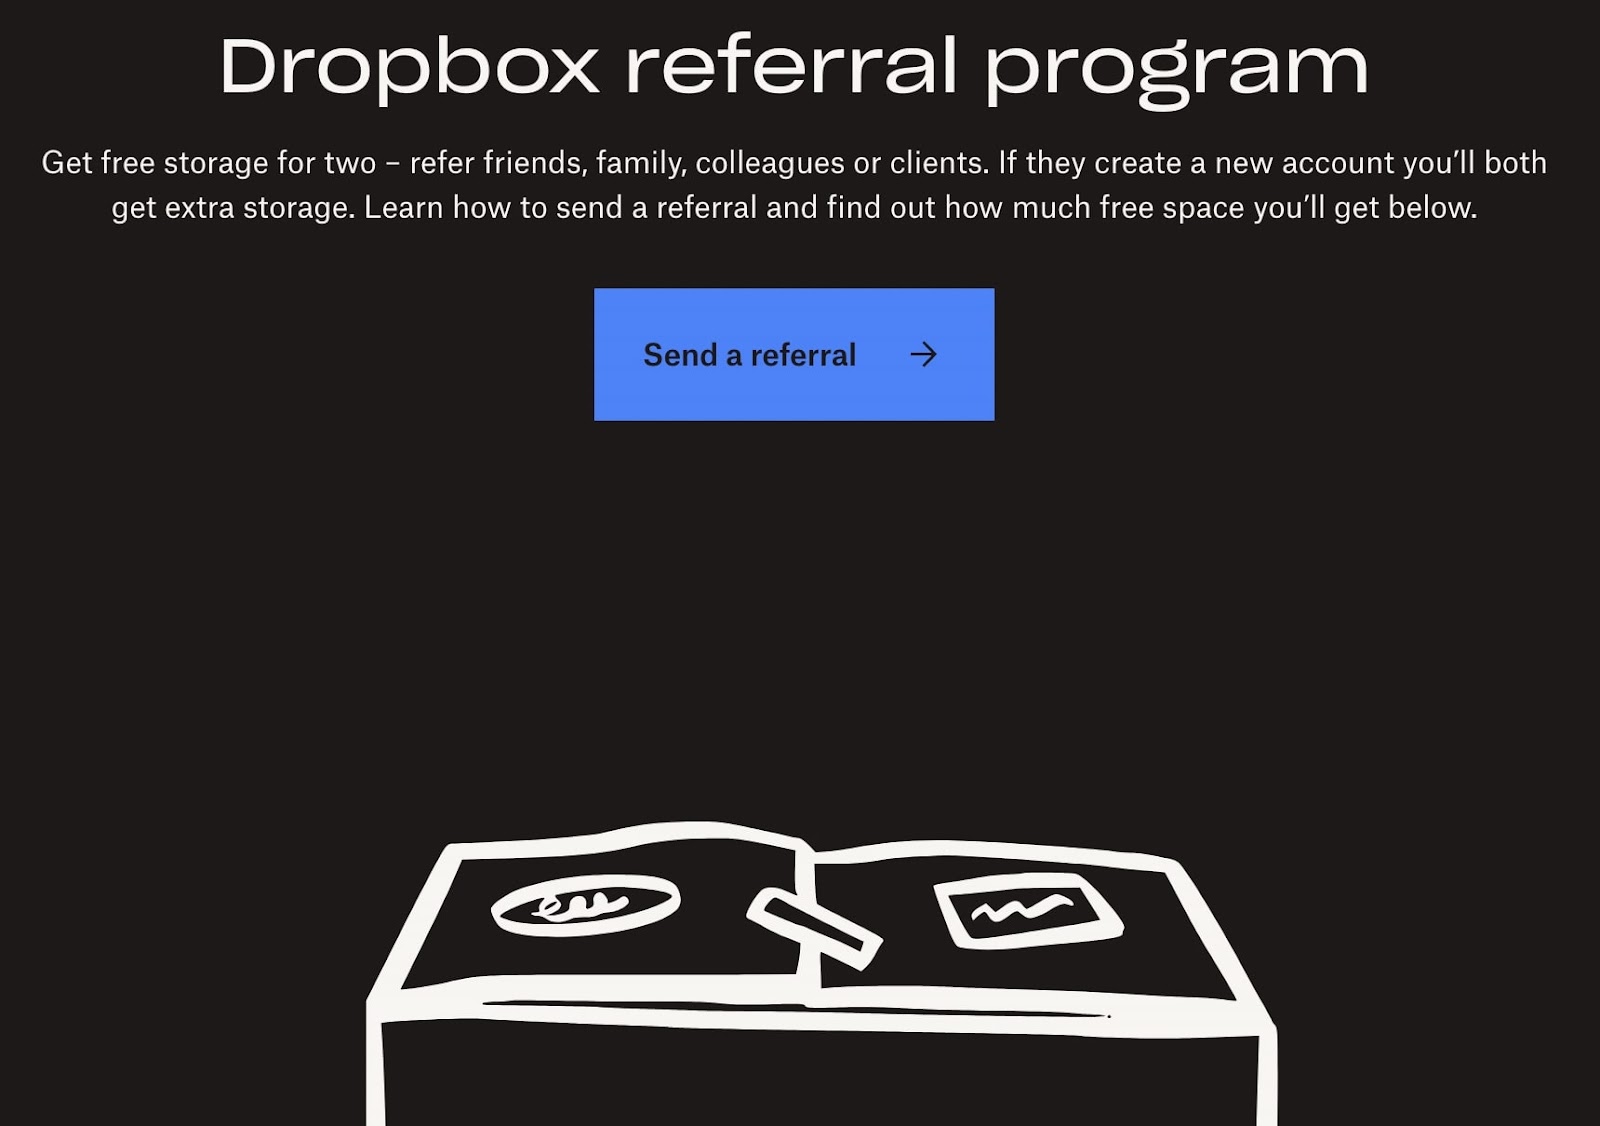 Dropbox’s “Refer a Friend” program page